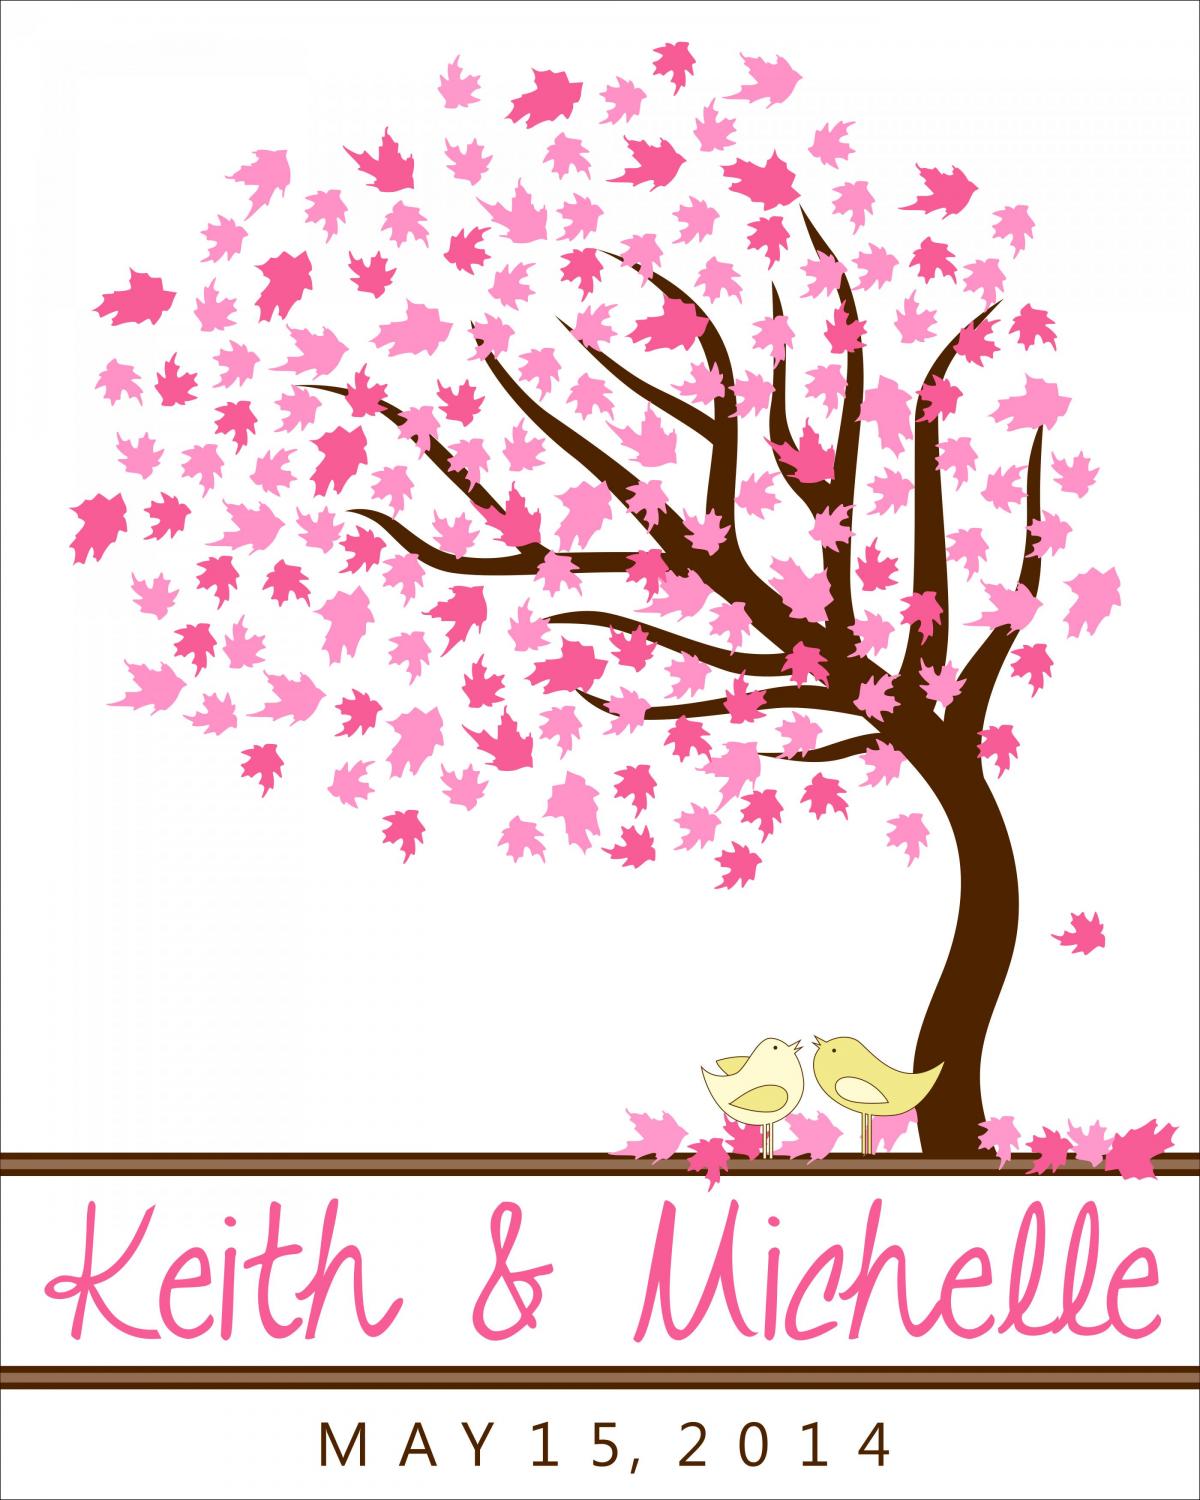 Personalized Wedding Signature Tree 18x24 100 Signatures, Wedding Guest Book Alternative